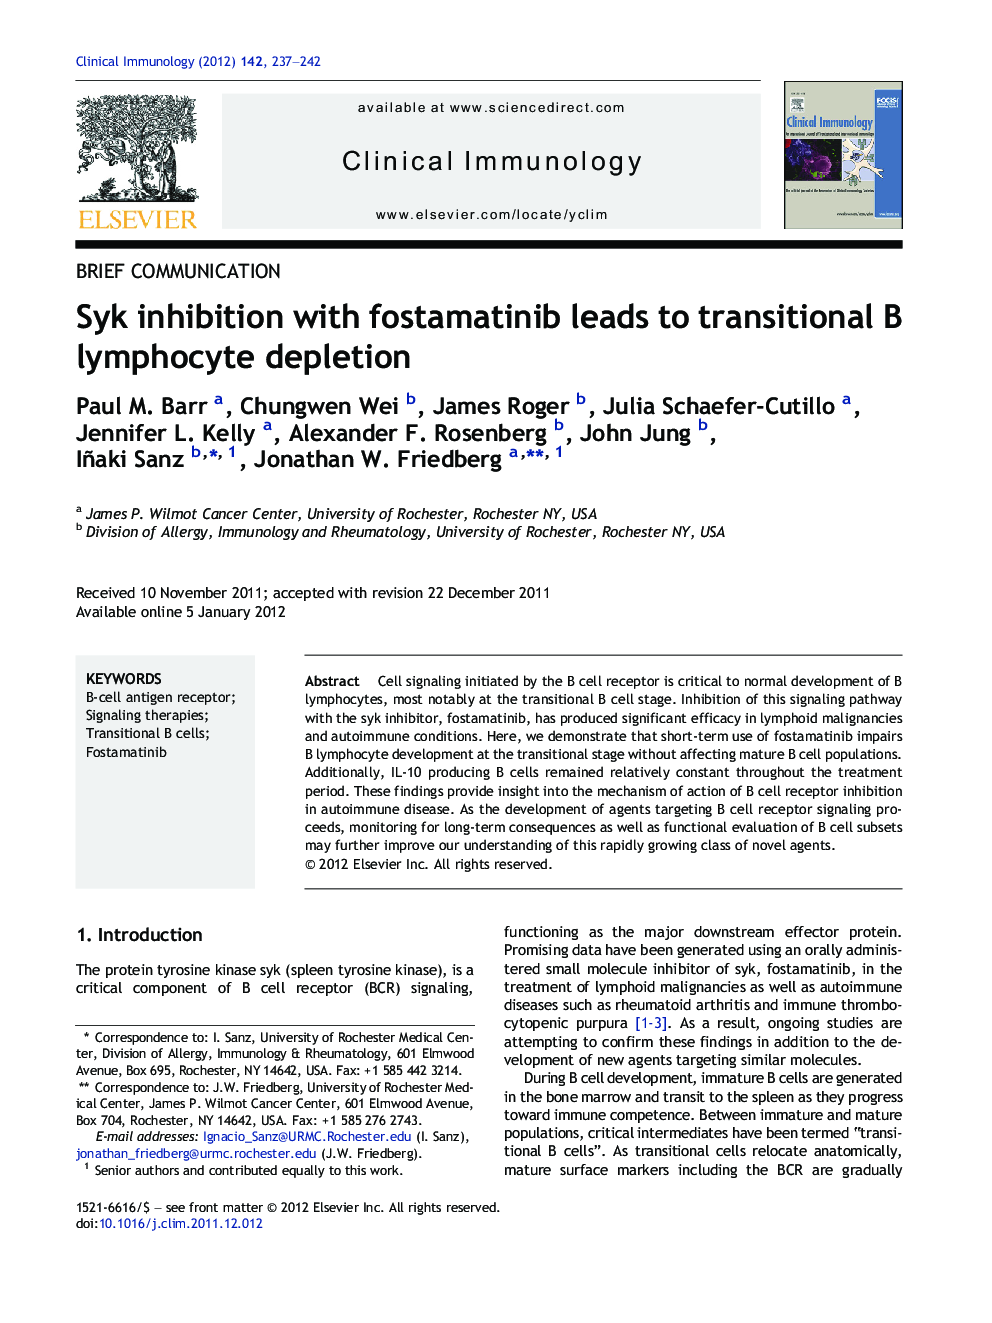 Syk inhibition with fostamatinib leads to transitional B lymphocyte depletion